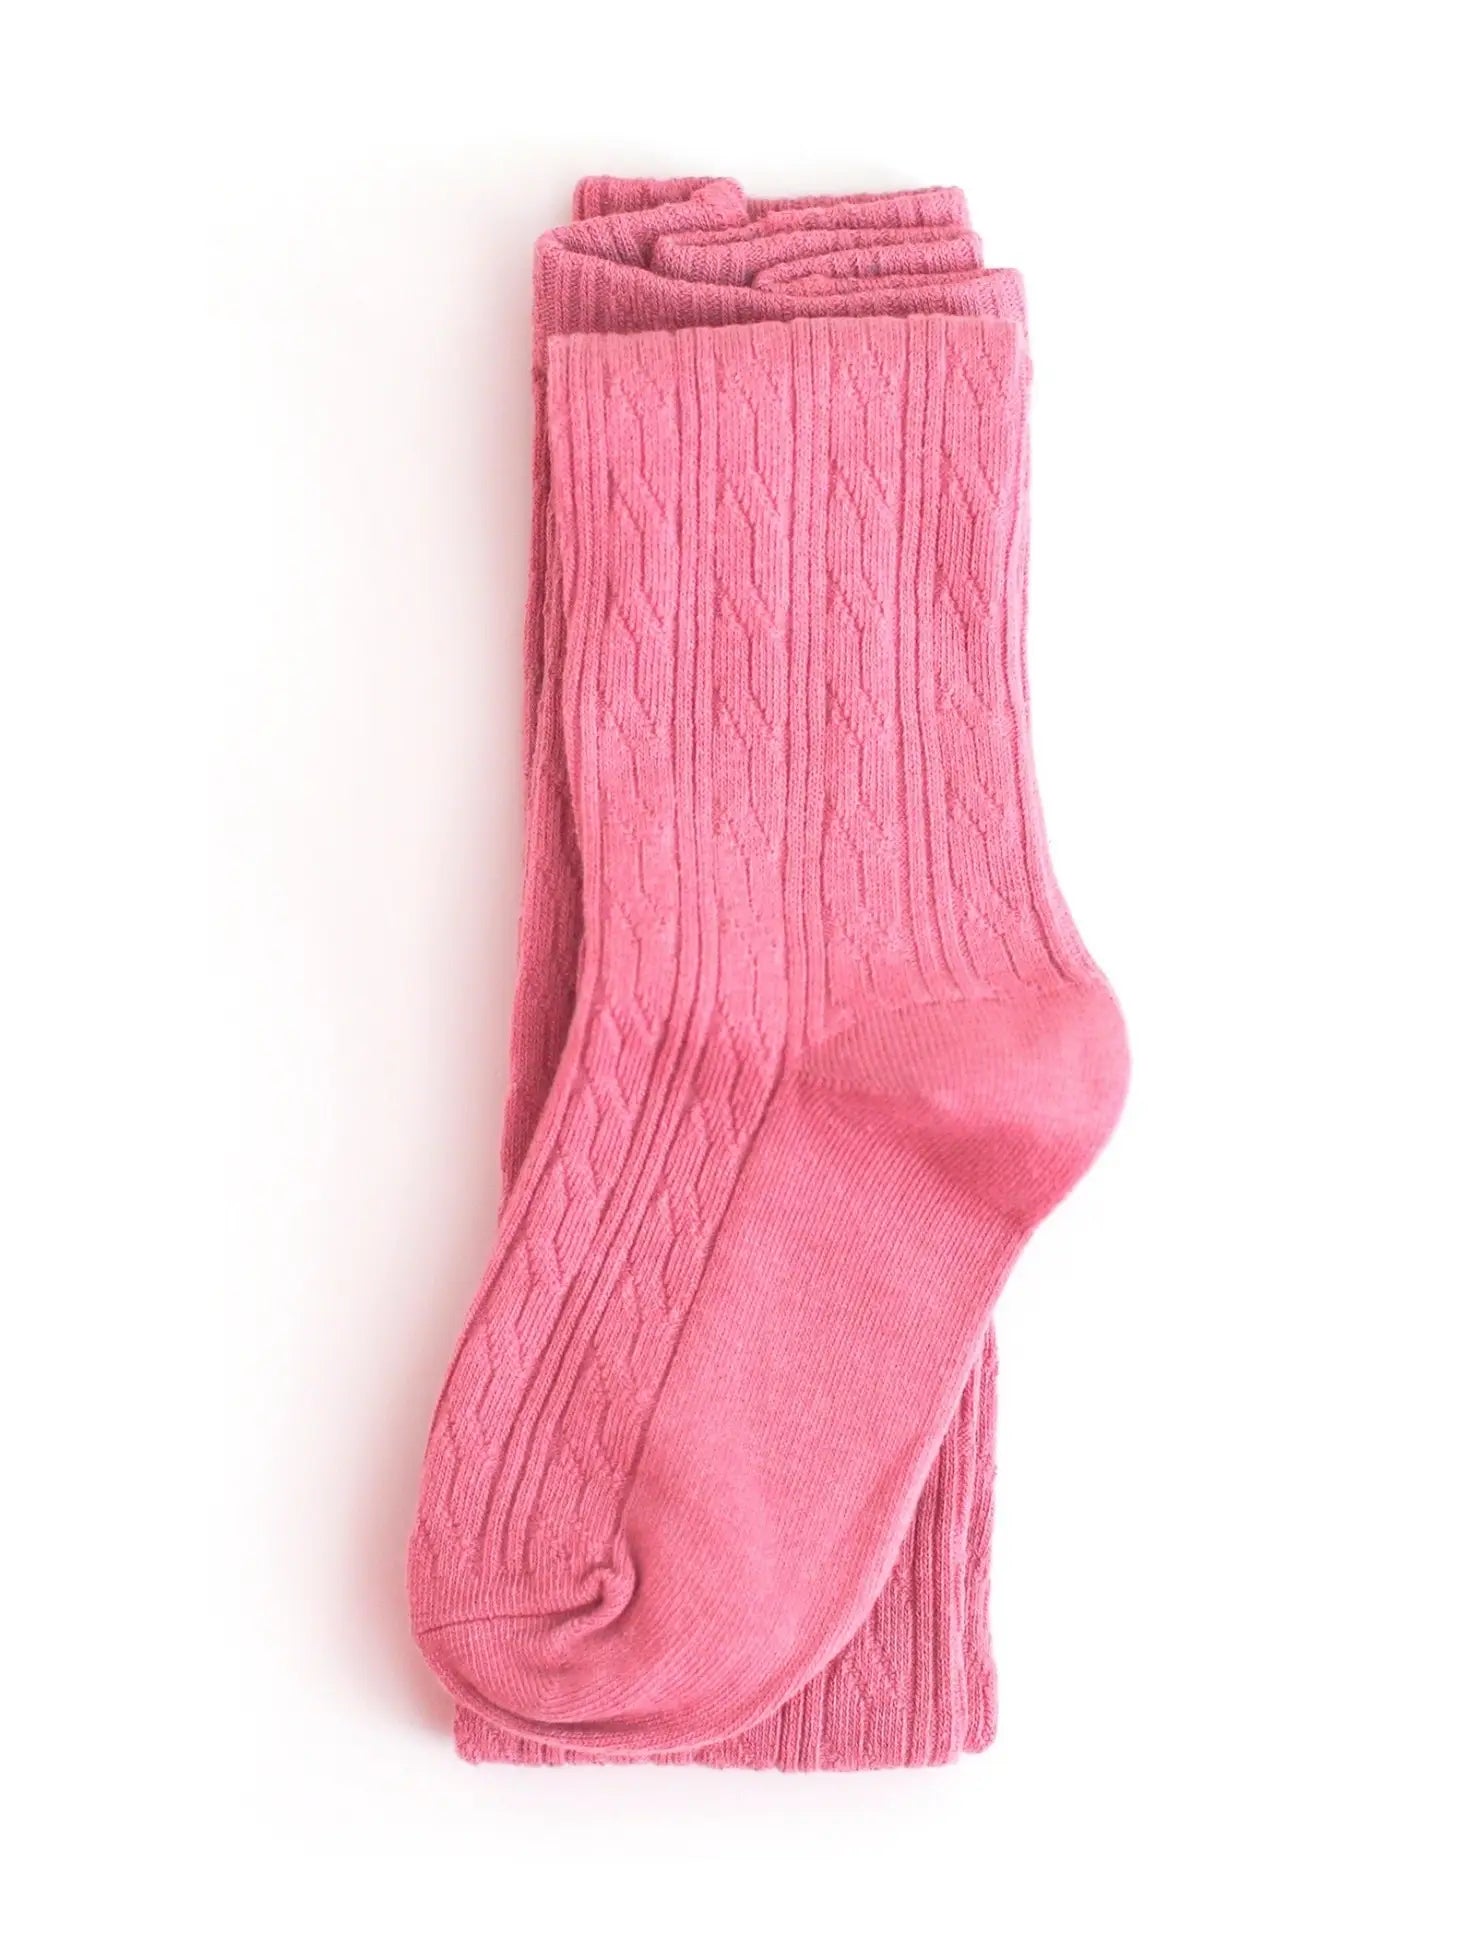 Malibu Pink Cable Knit Tights